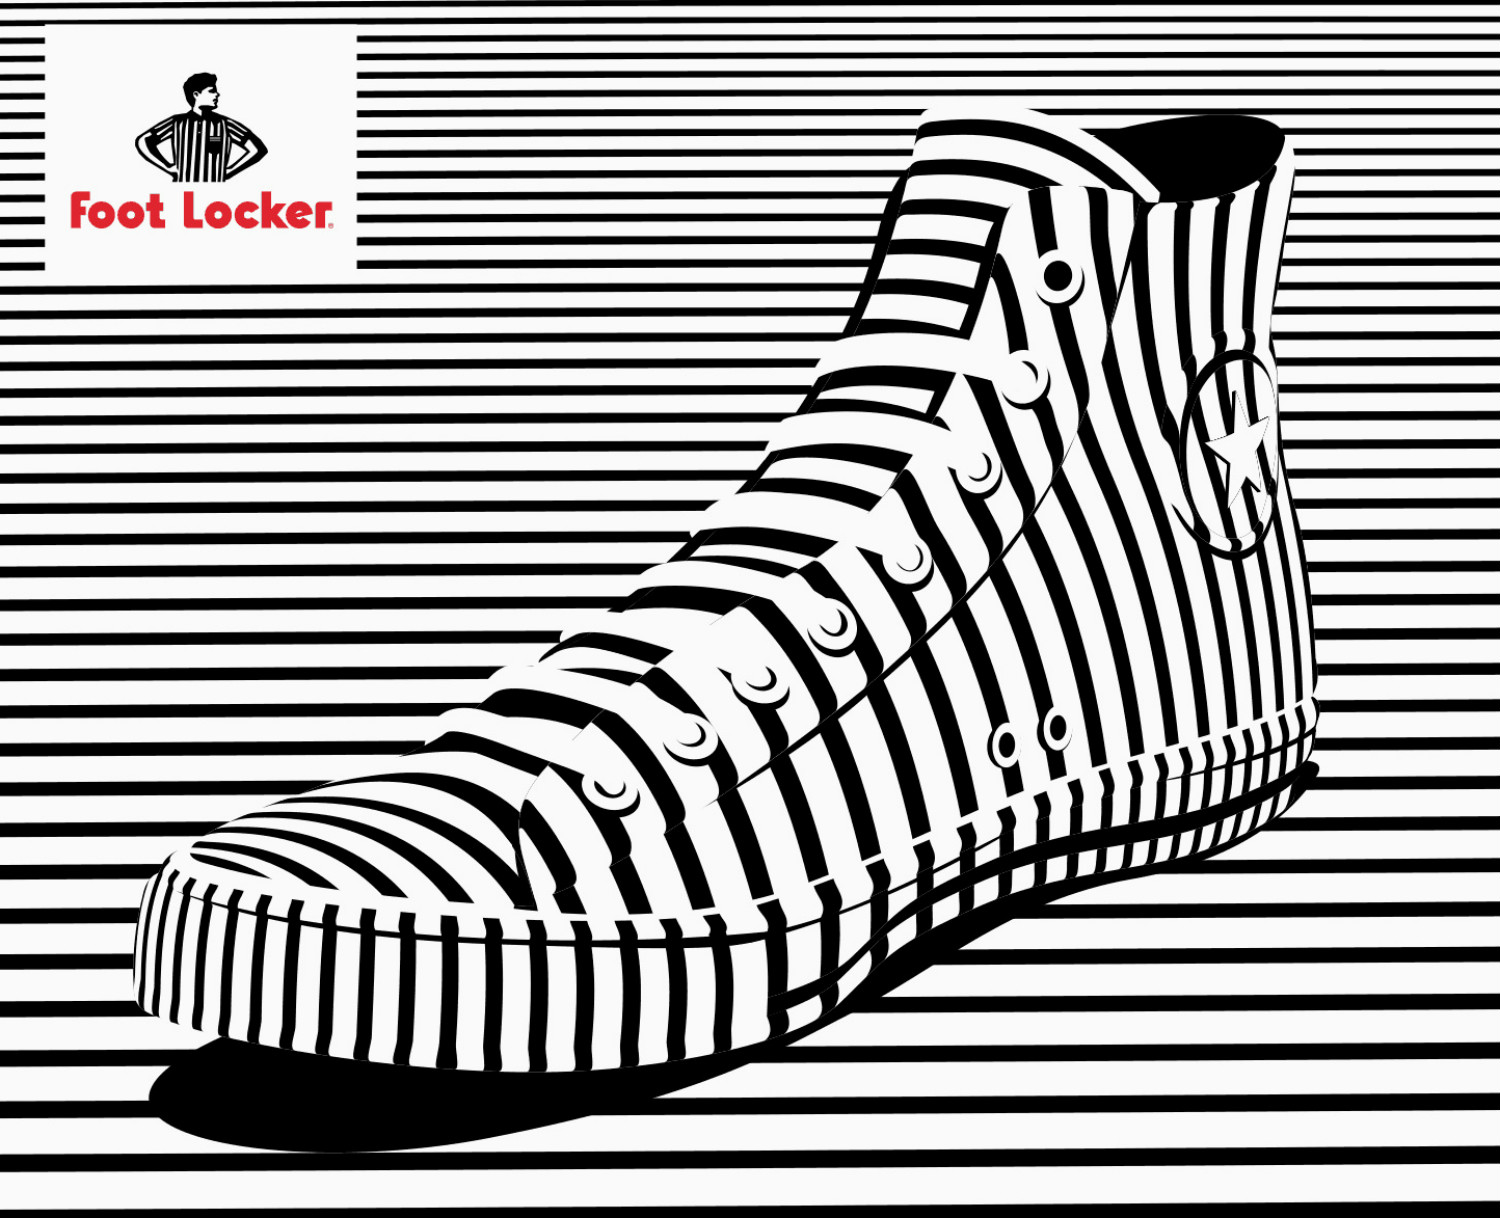 alex trochut black white illusion illustration foot locker sneaker